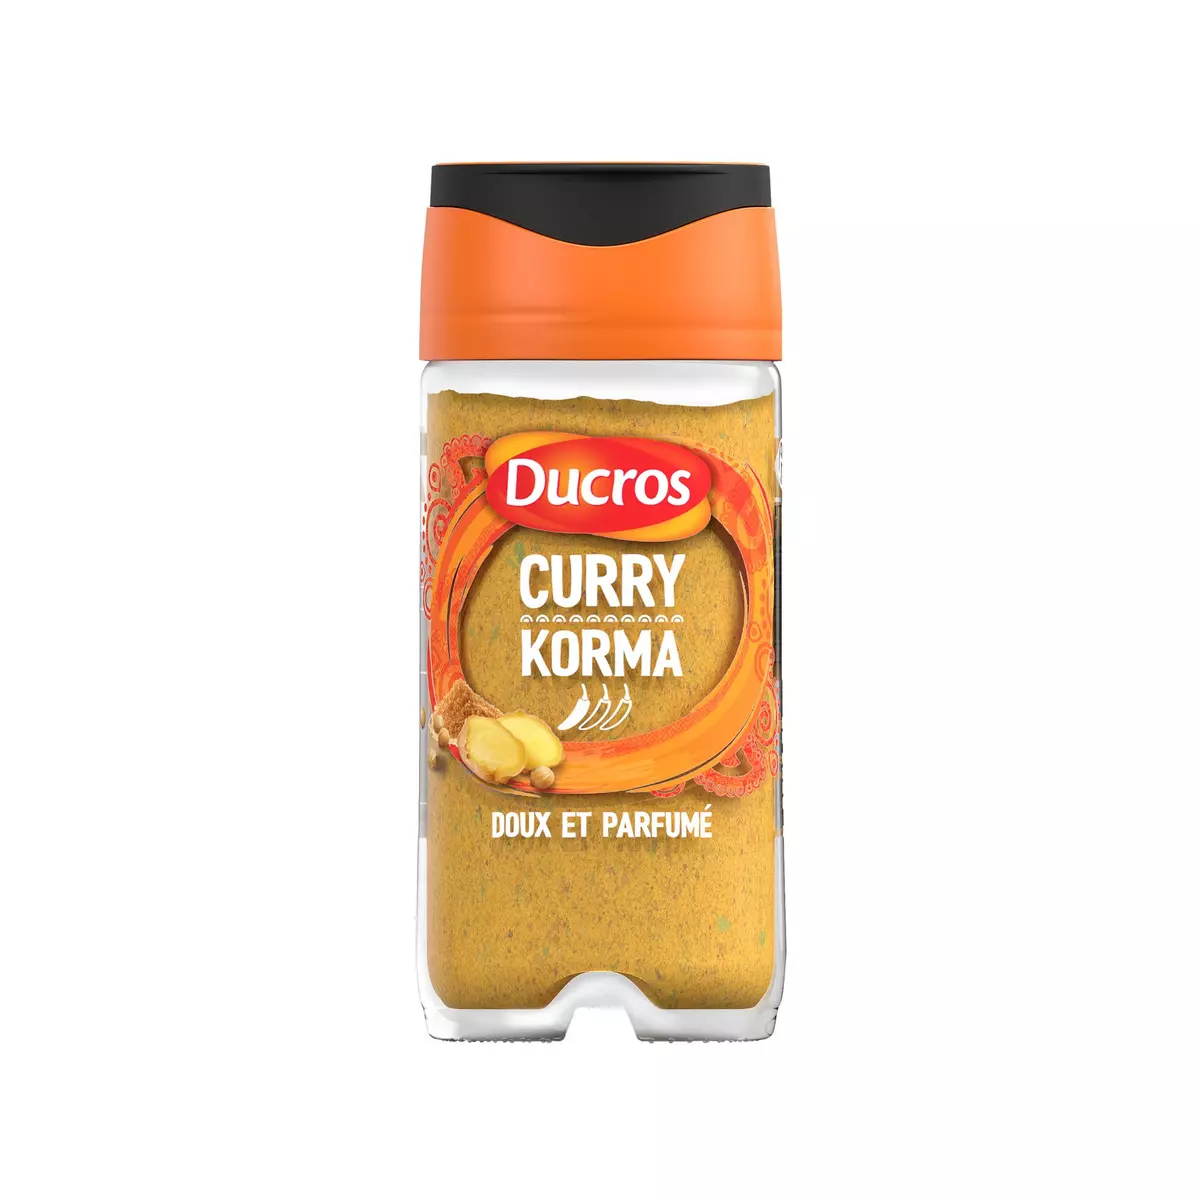 DUCROS Curry korma doux et parfumé 42g